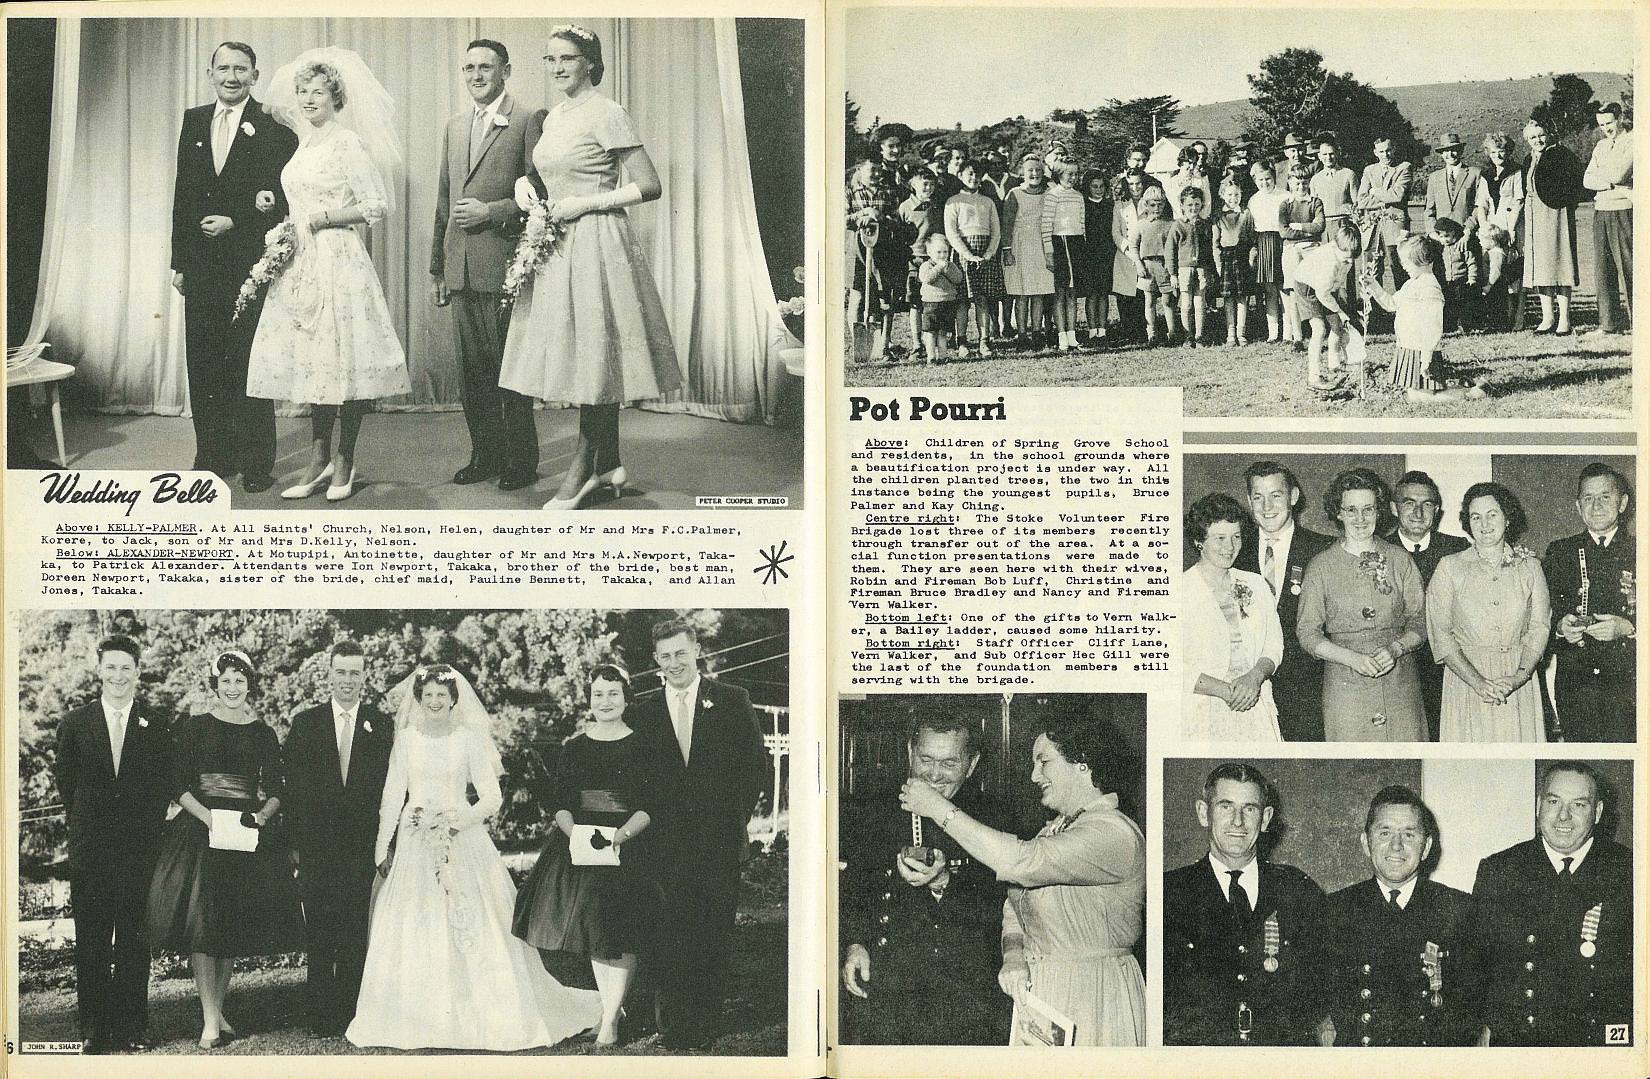 Wedding Bells Nelson Photo News No 22 August 18, 1962